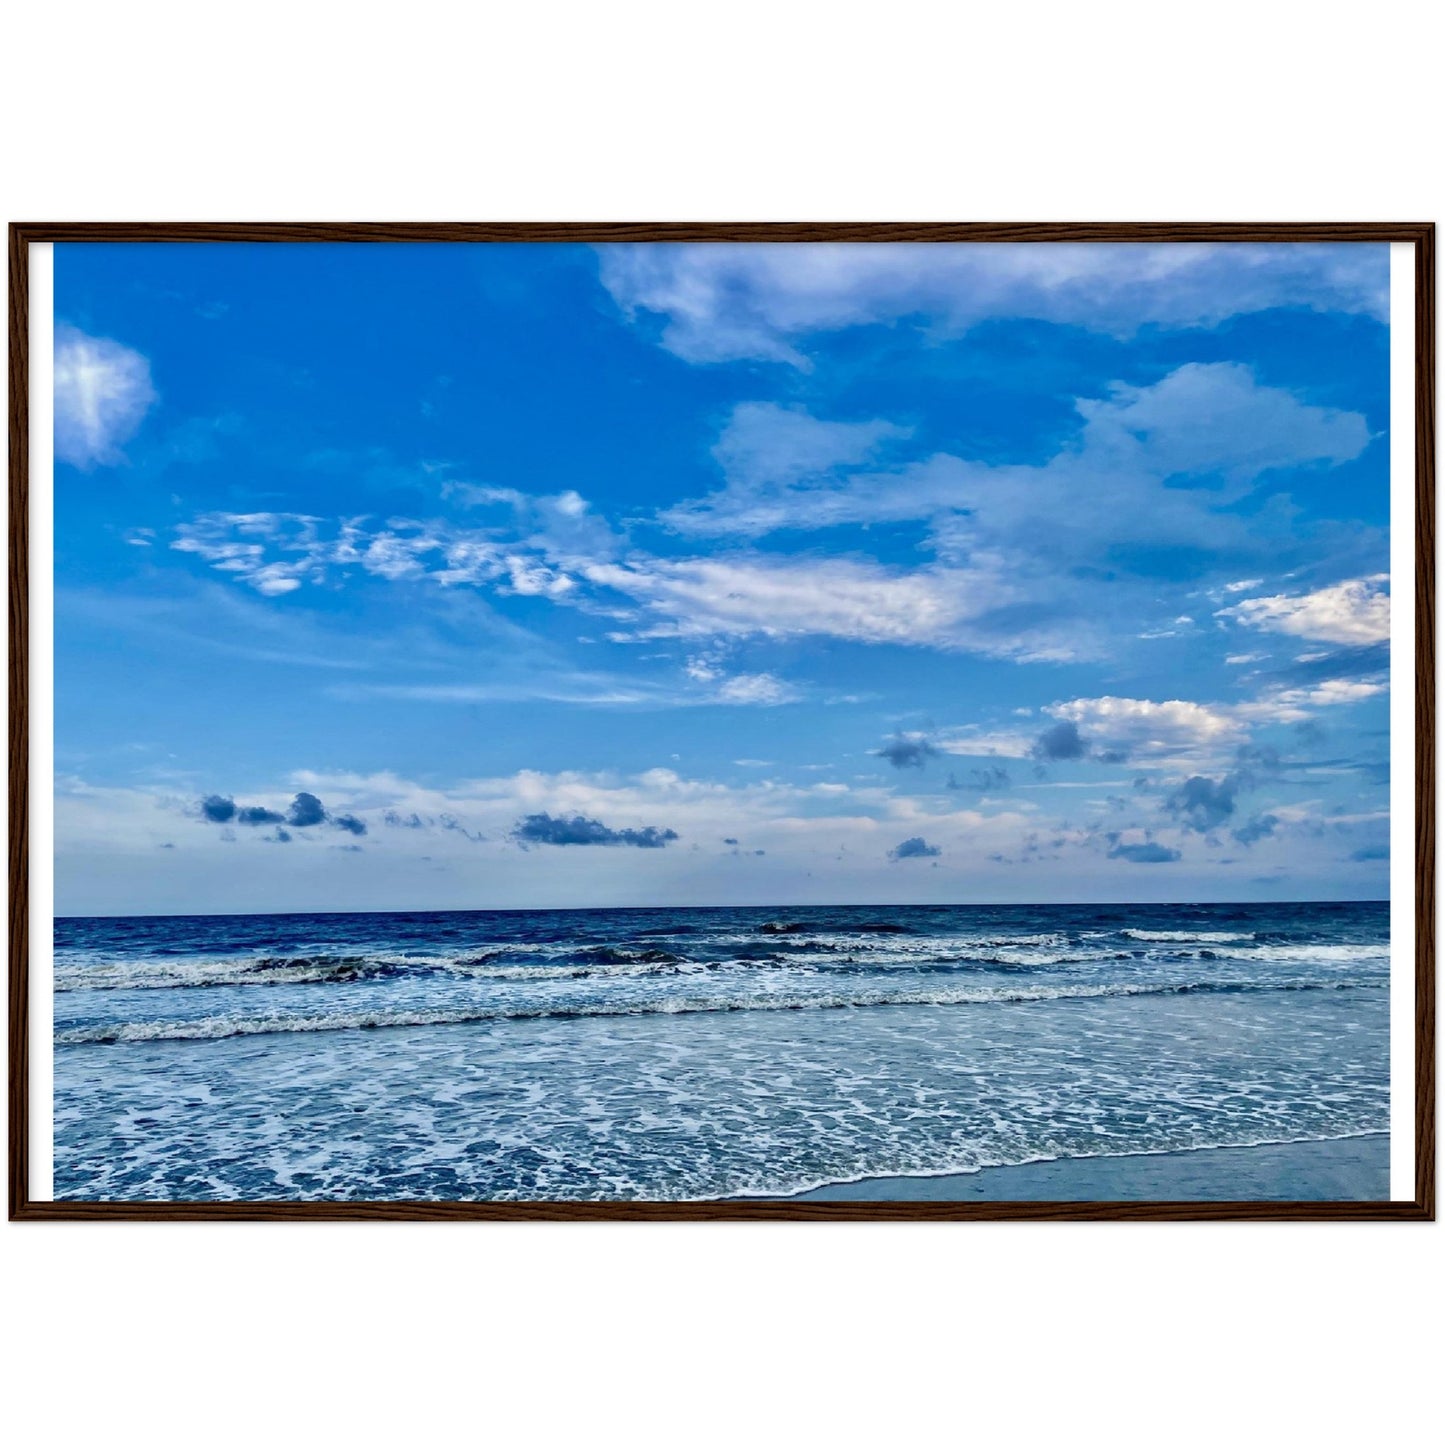 Atlantic Ocean off Hilton Head Island Premium Matte Paper Wooden Framed Poster